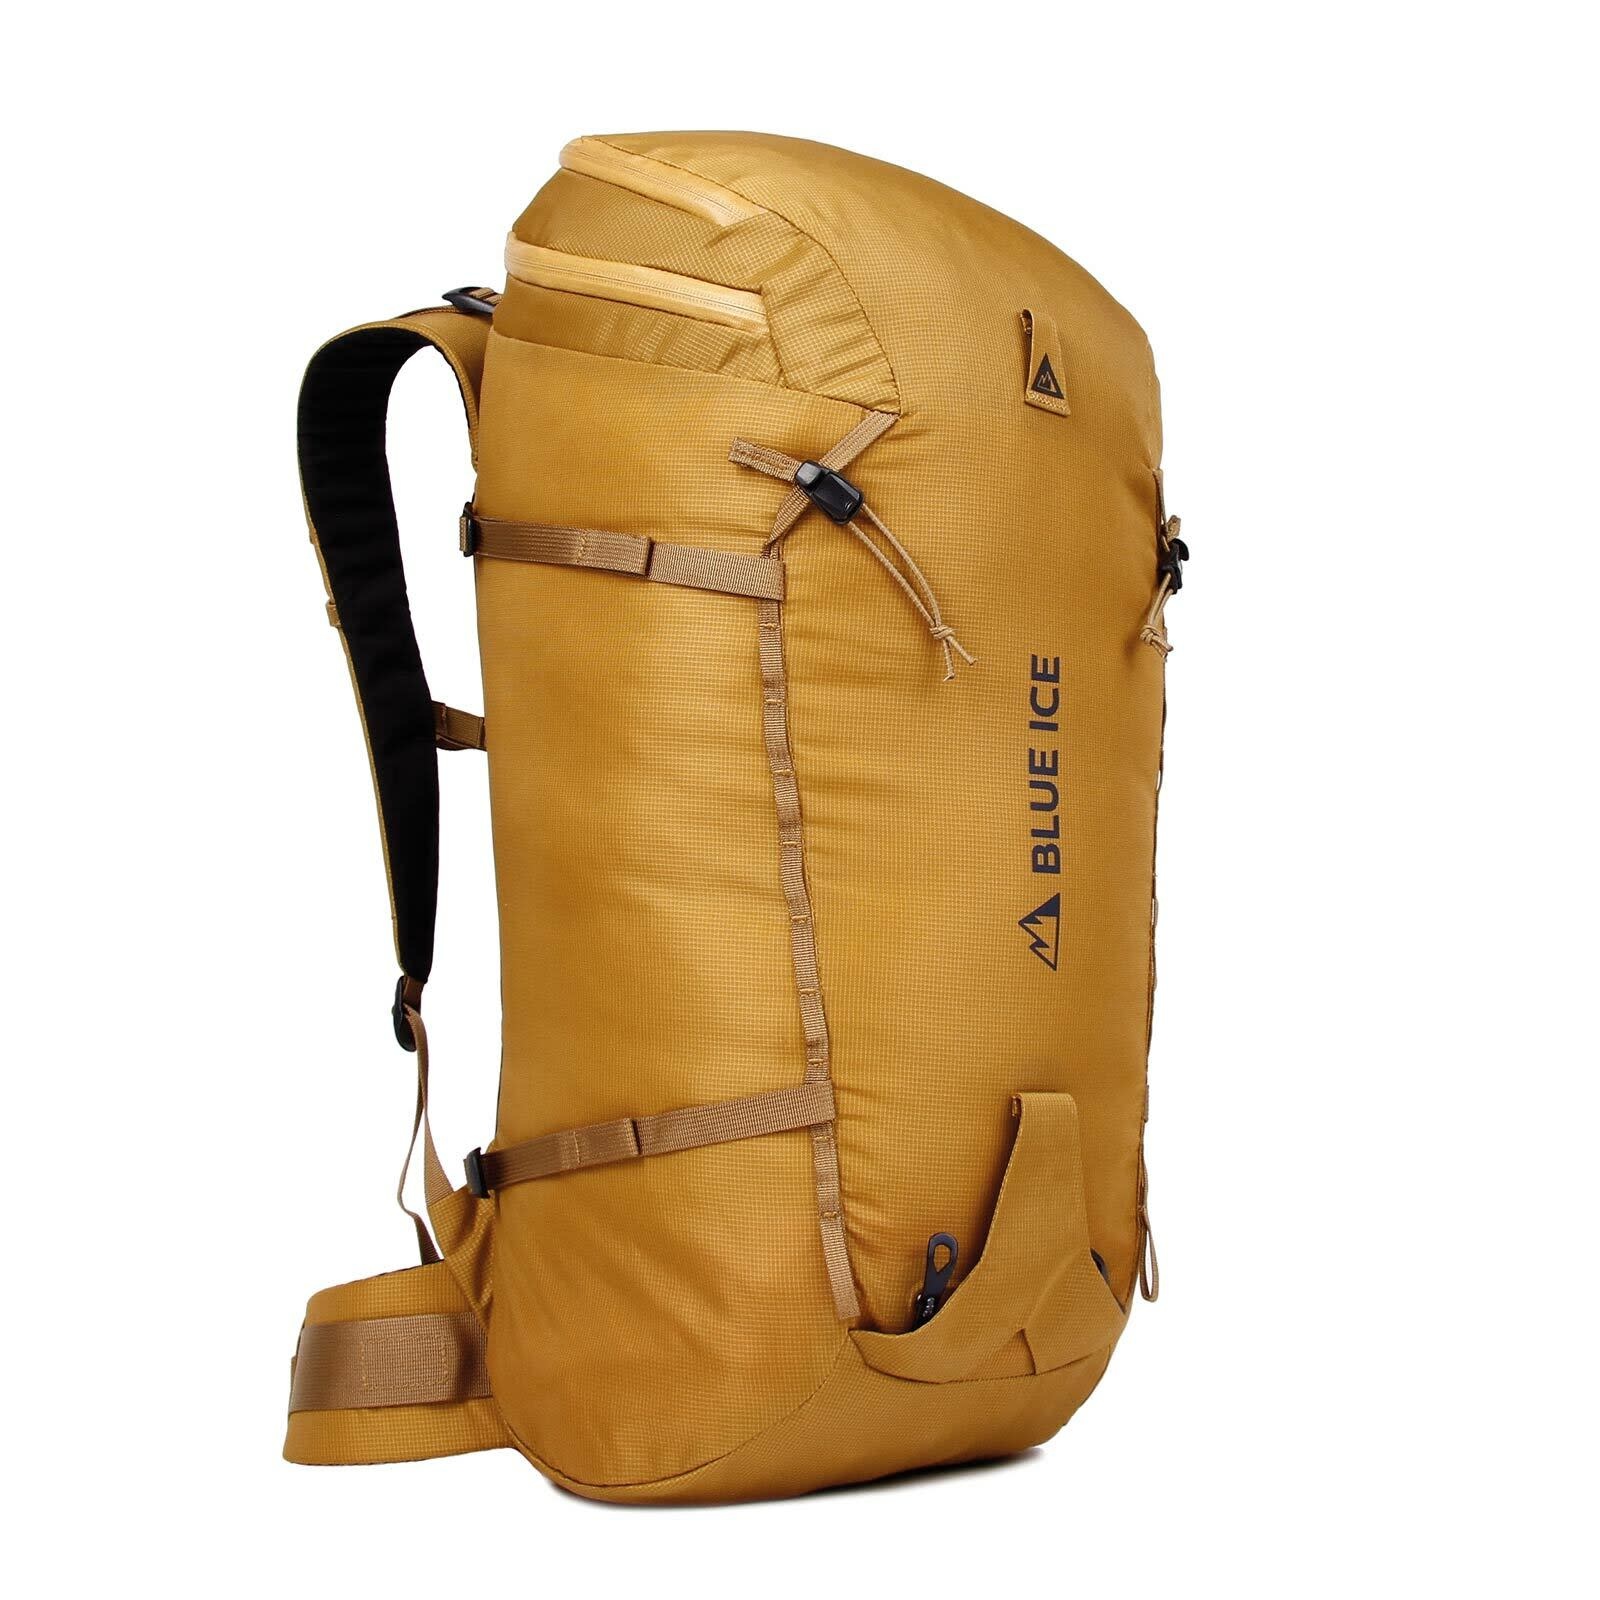 Chiru 32 Backpack - Alpenglow Adventure Sports